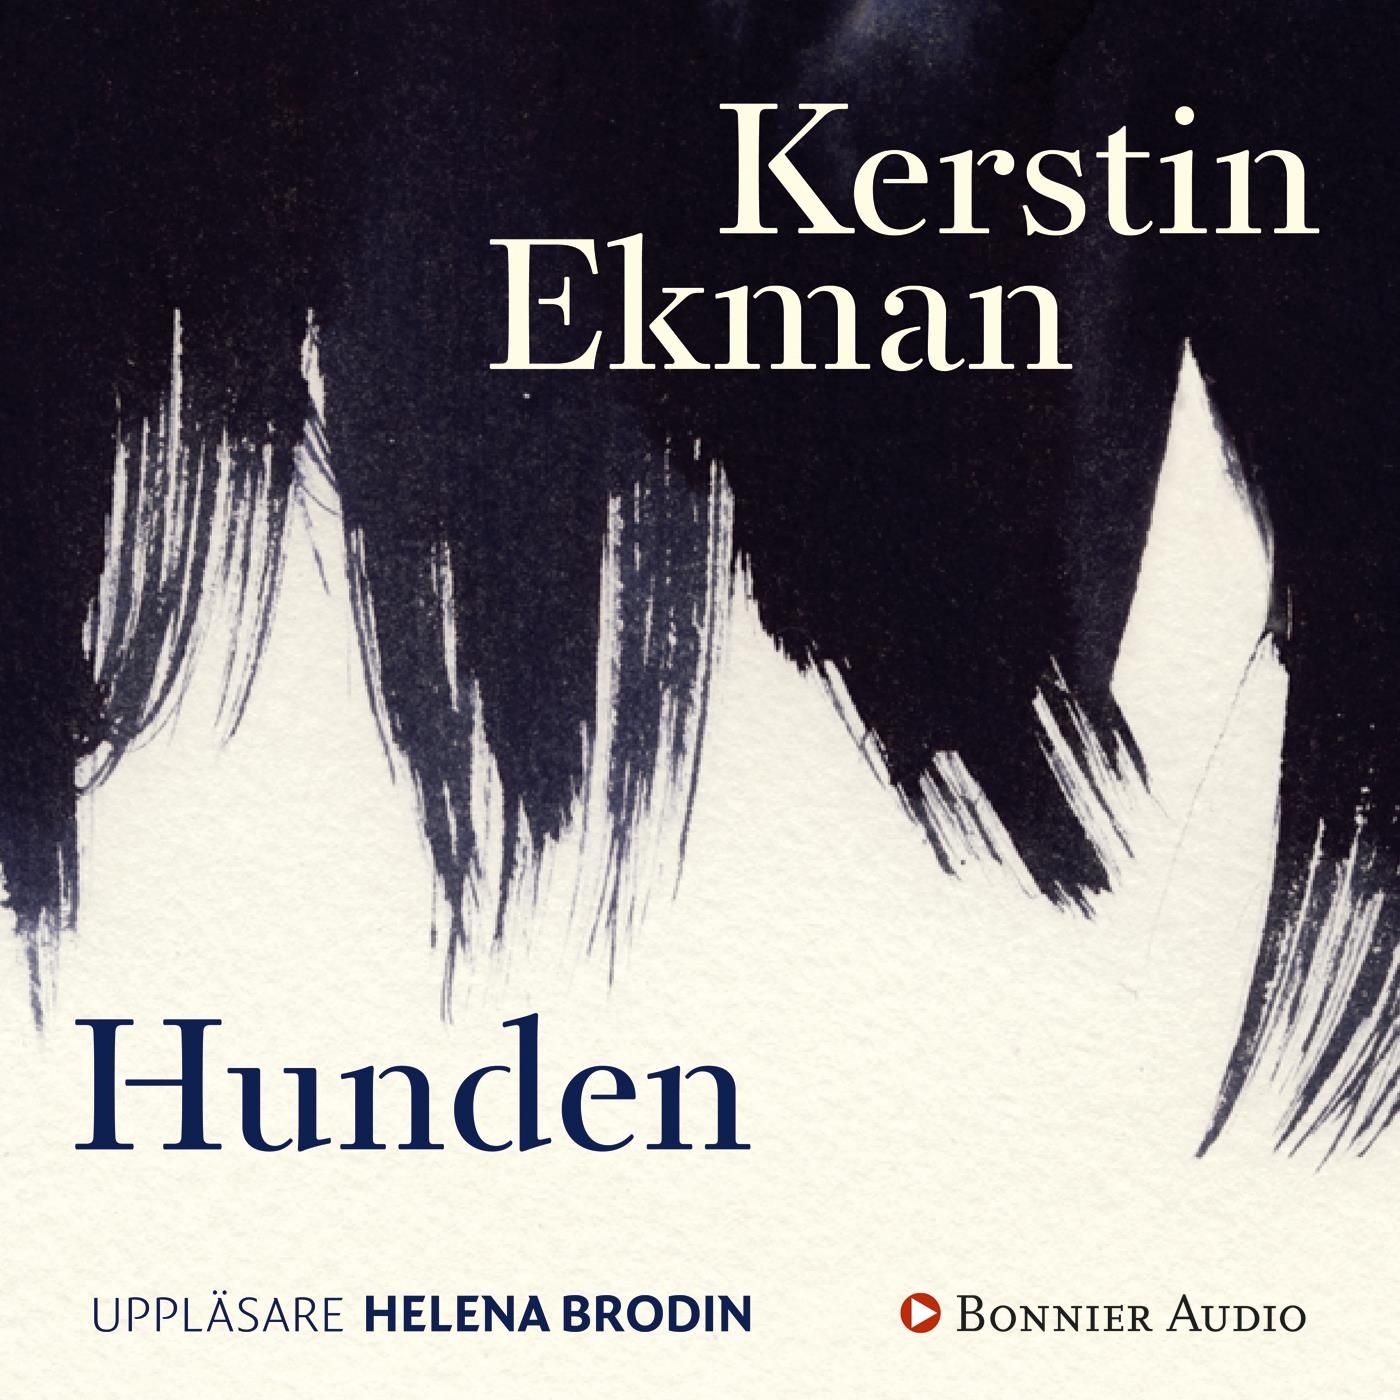 Hunden, ljudbok av Kerstin Ekman